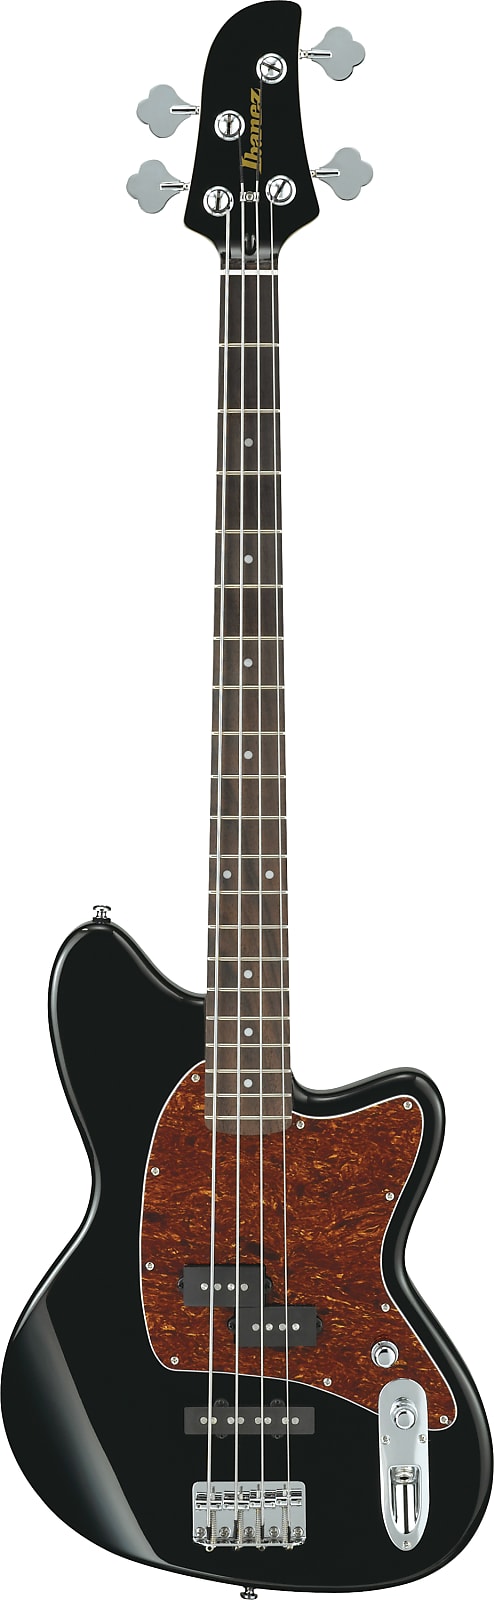 Ibanez TMB100 Talman Standard Electric Bass Guitar Black